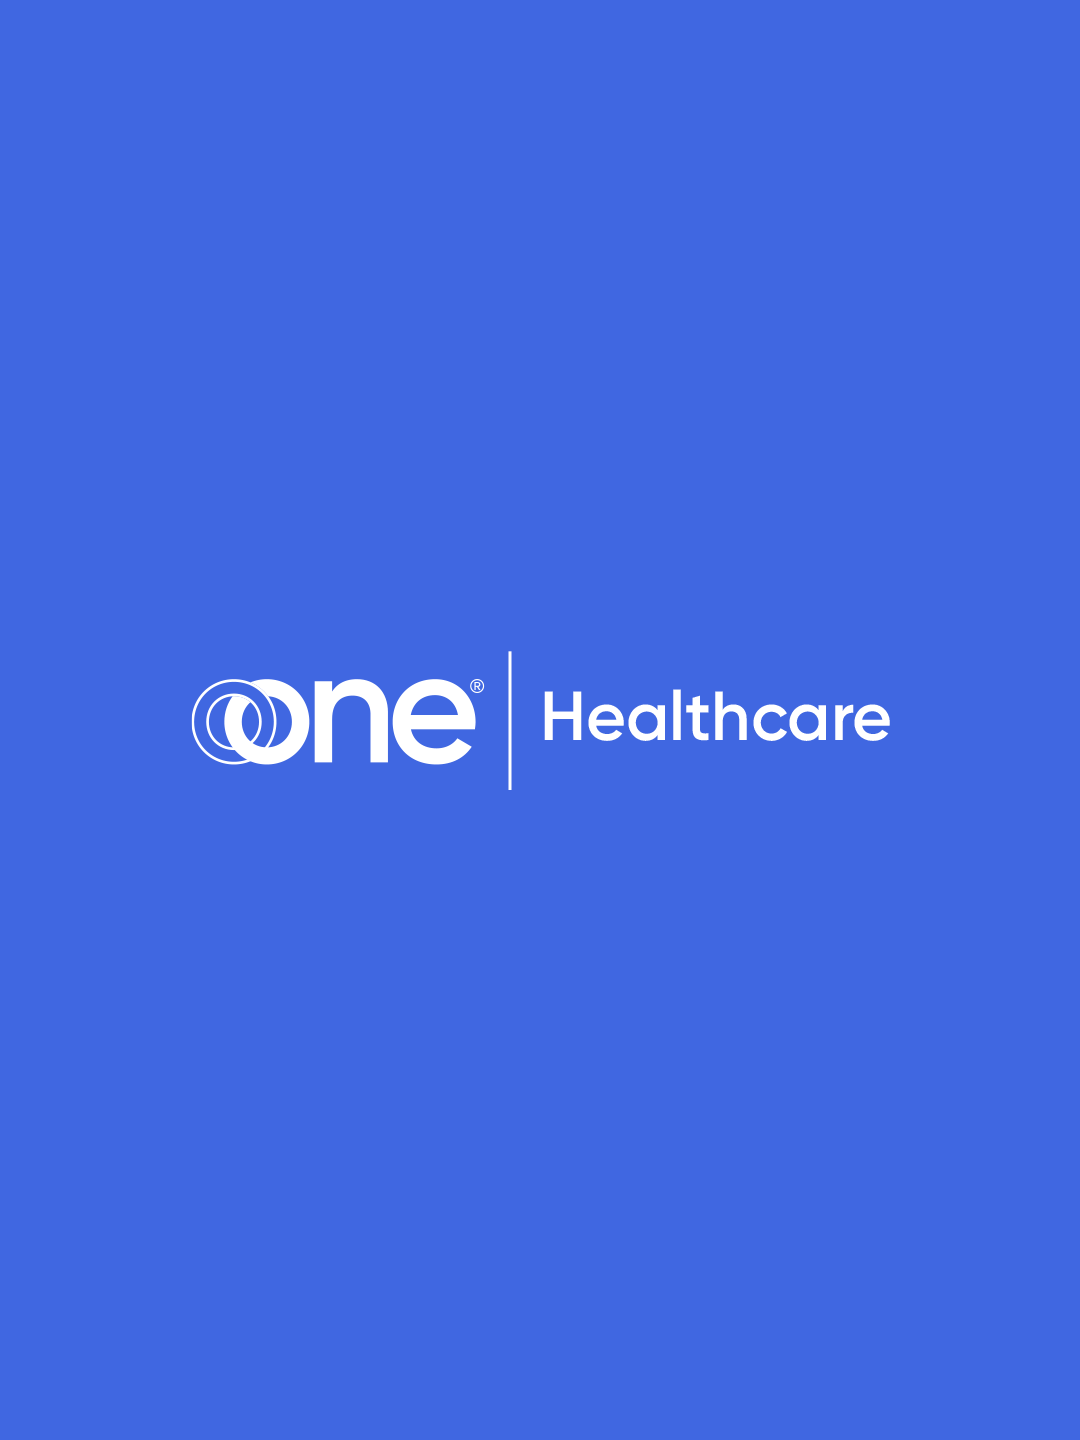 Healthcare logo design concept over a solid blue background.